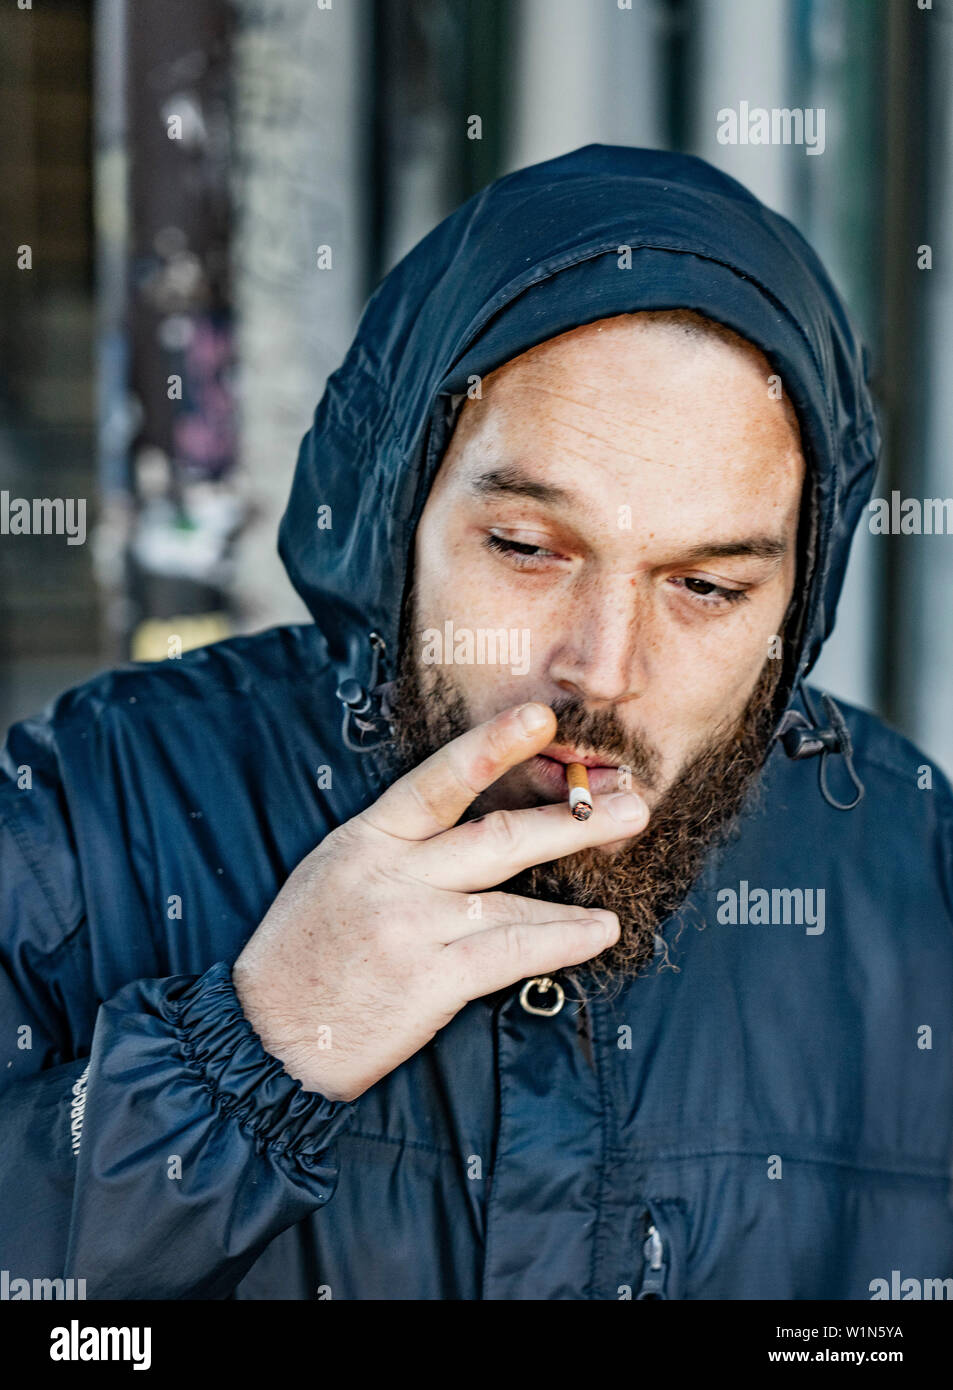 street portrait of a middle aged man in Philadelphia smoking Stock Photo